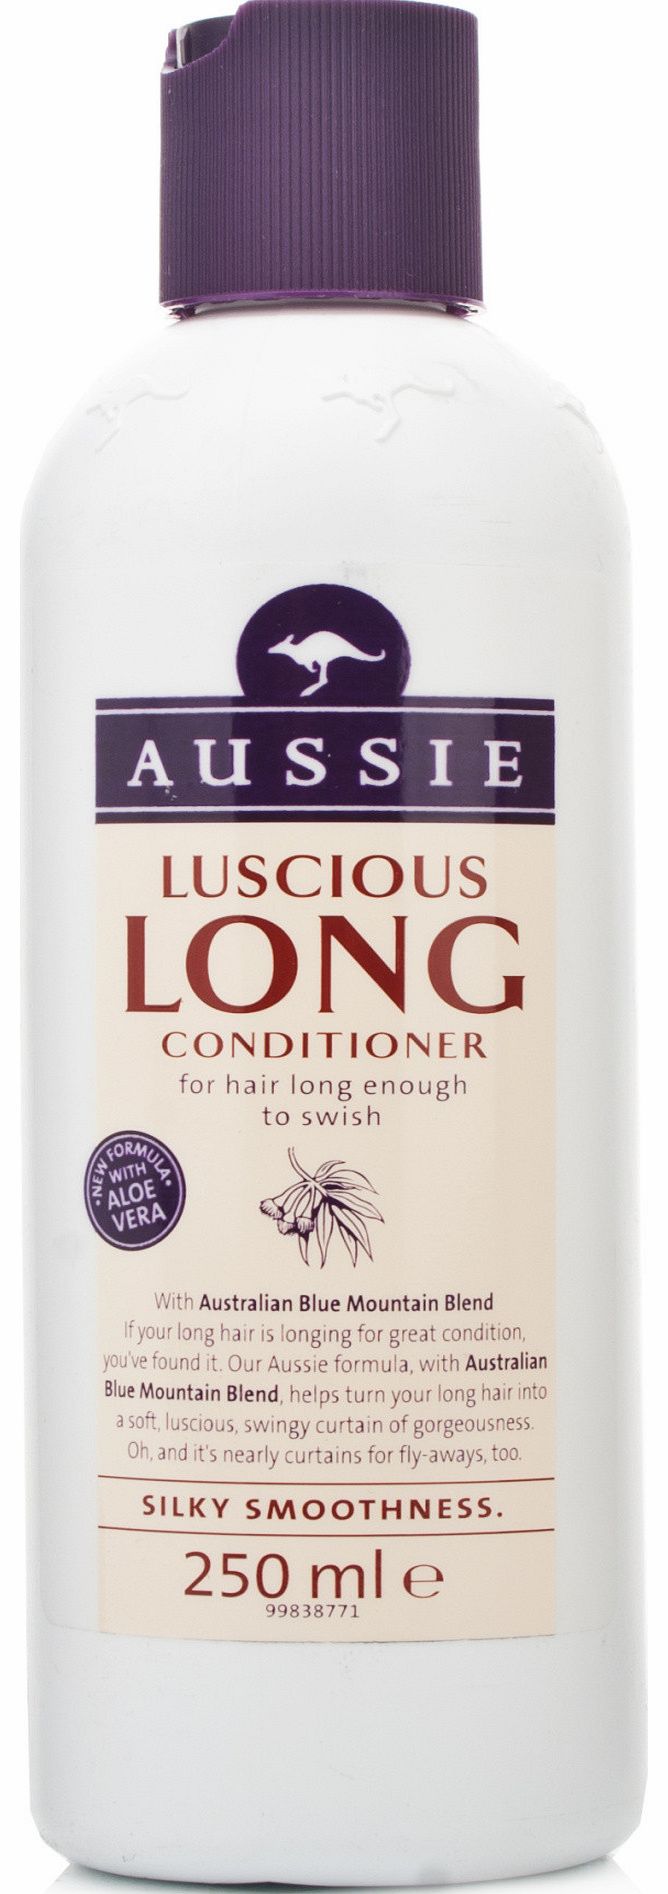 Luscious Long Conditioner